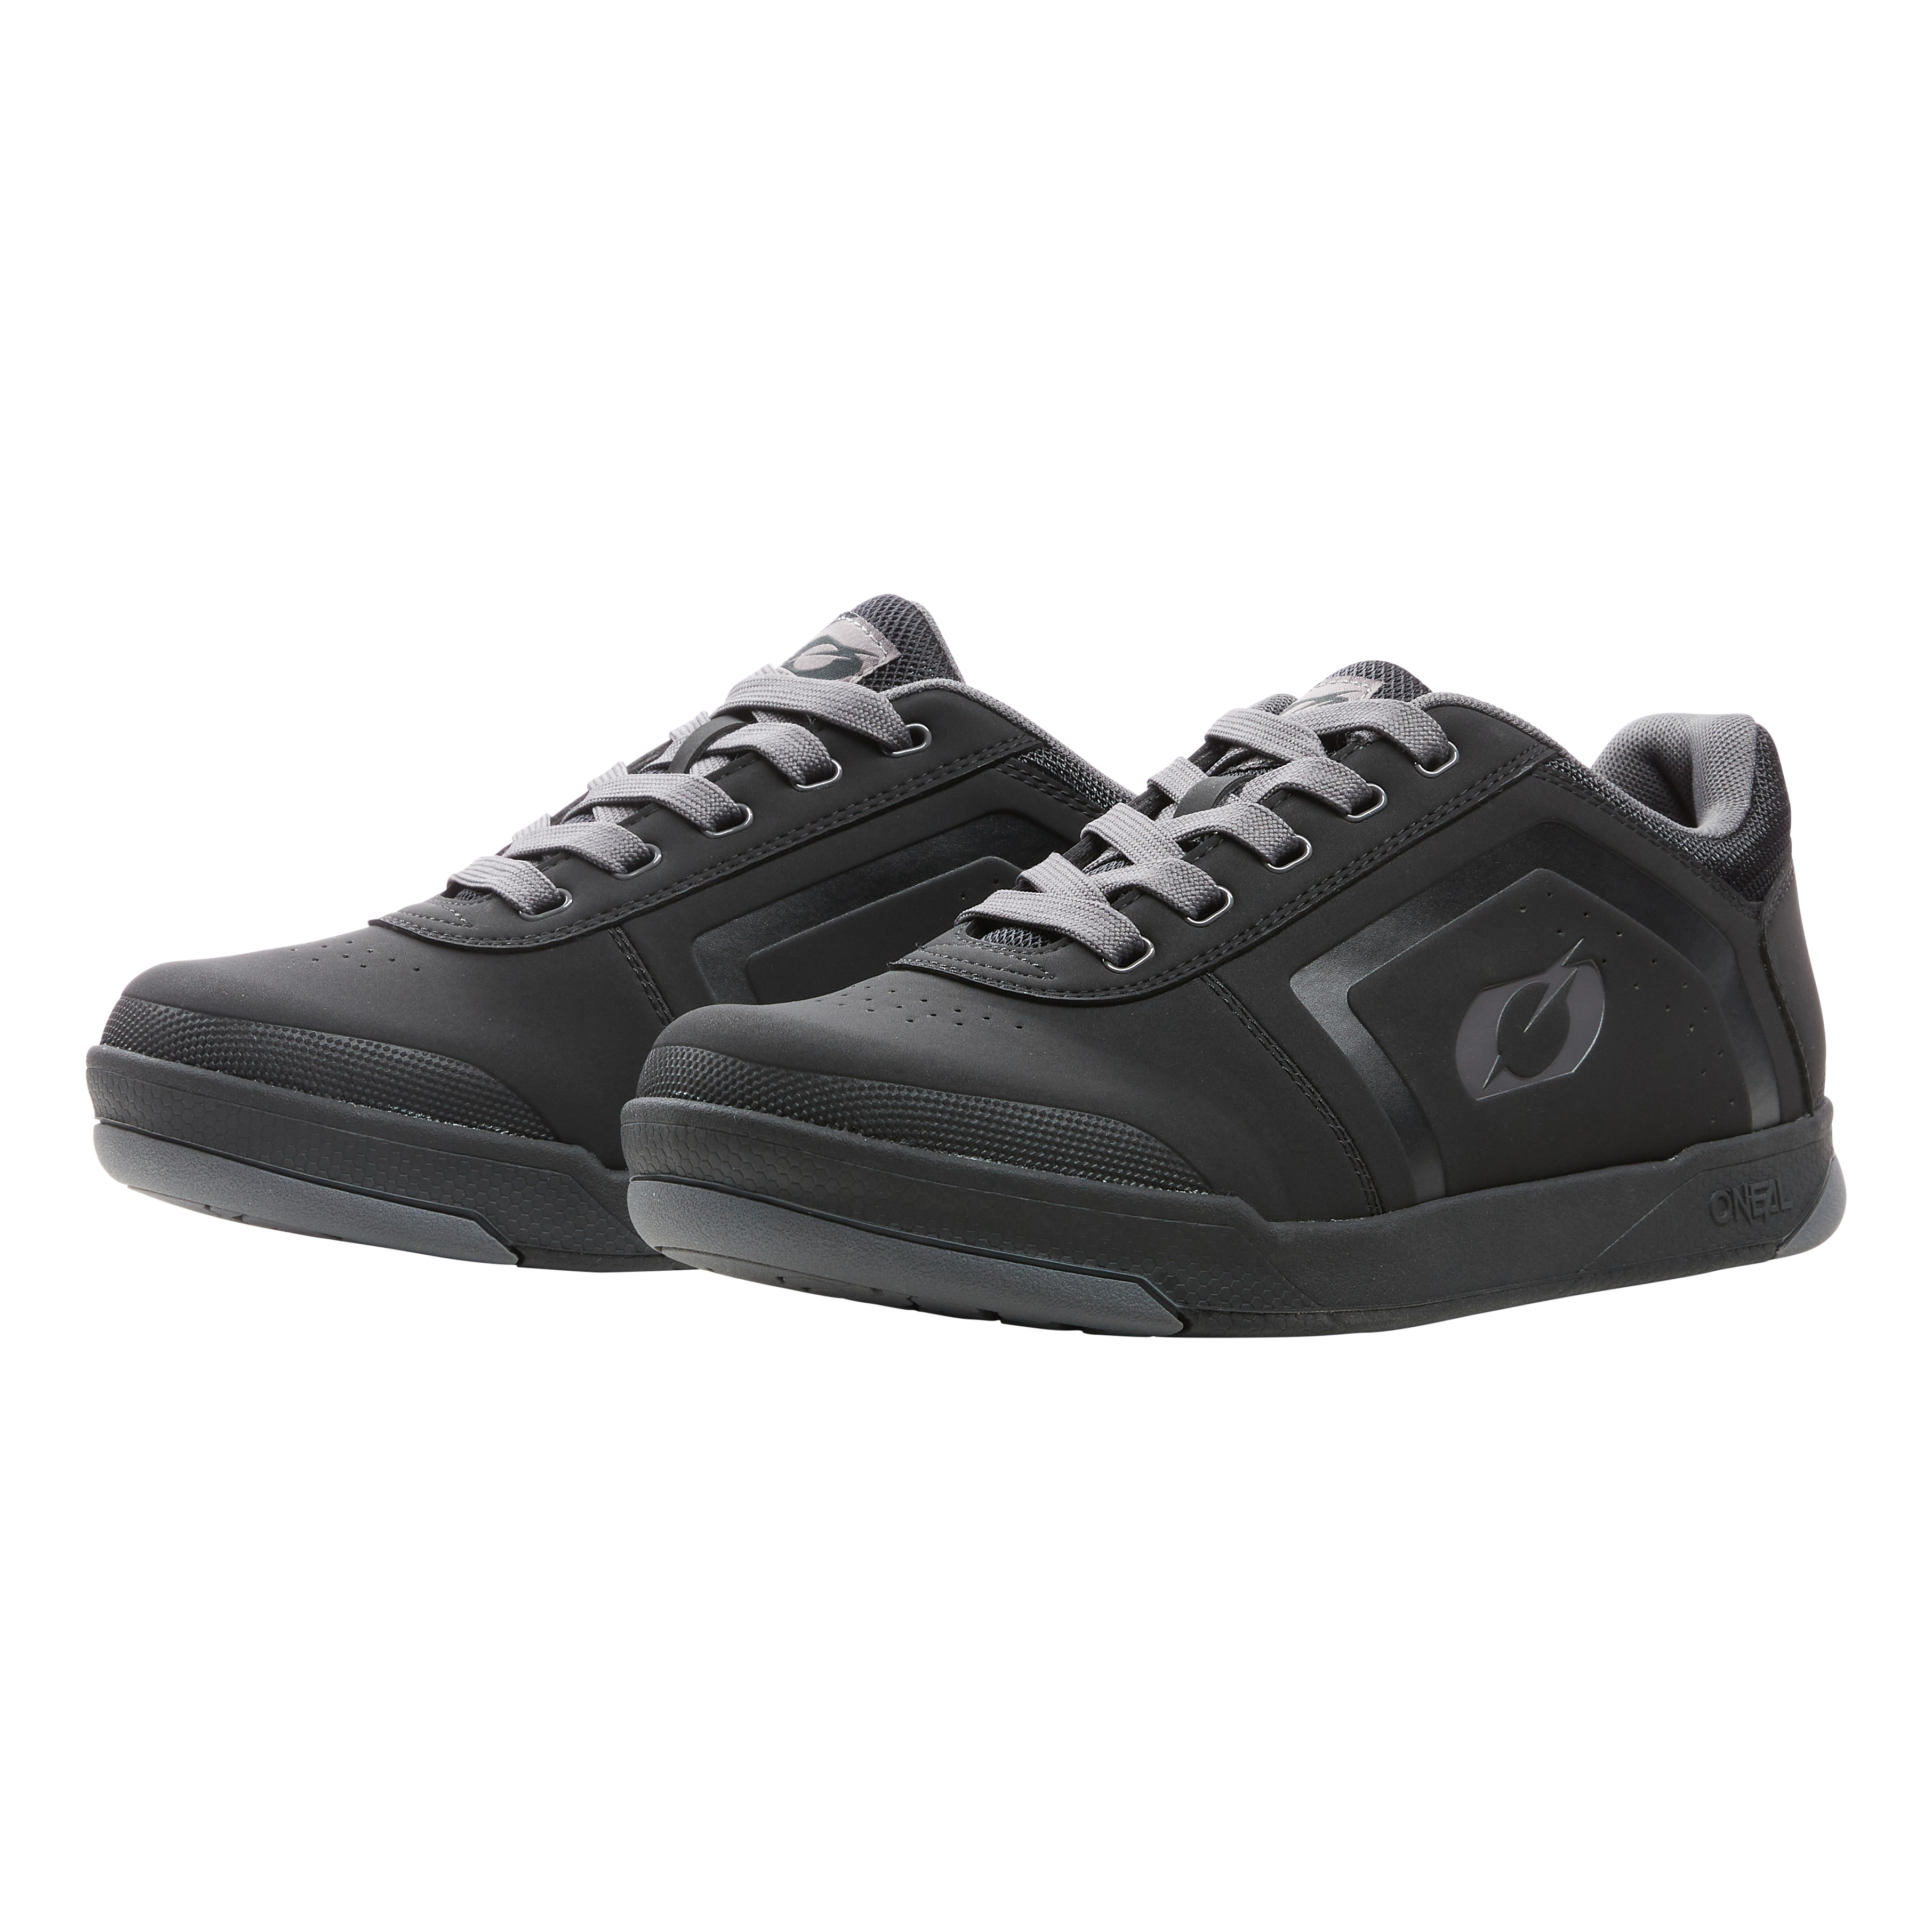 Pinned Flat Pedal Shoe Black/Gray